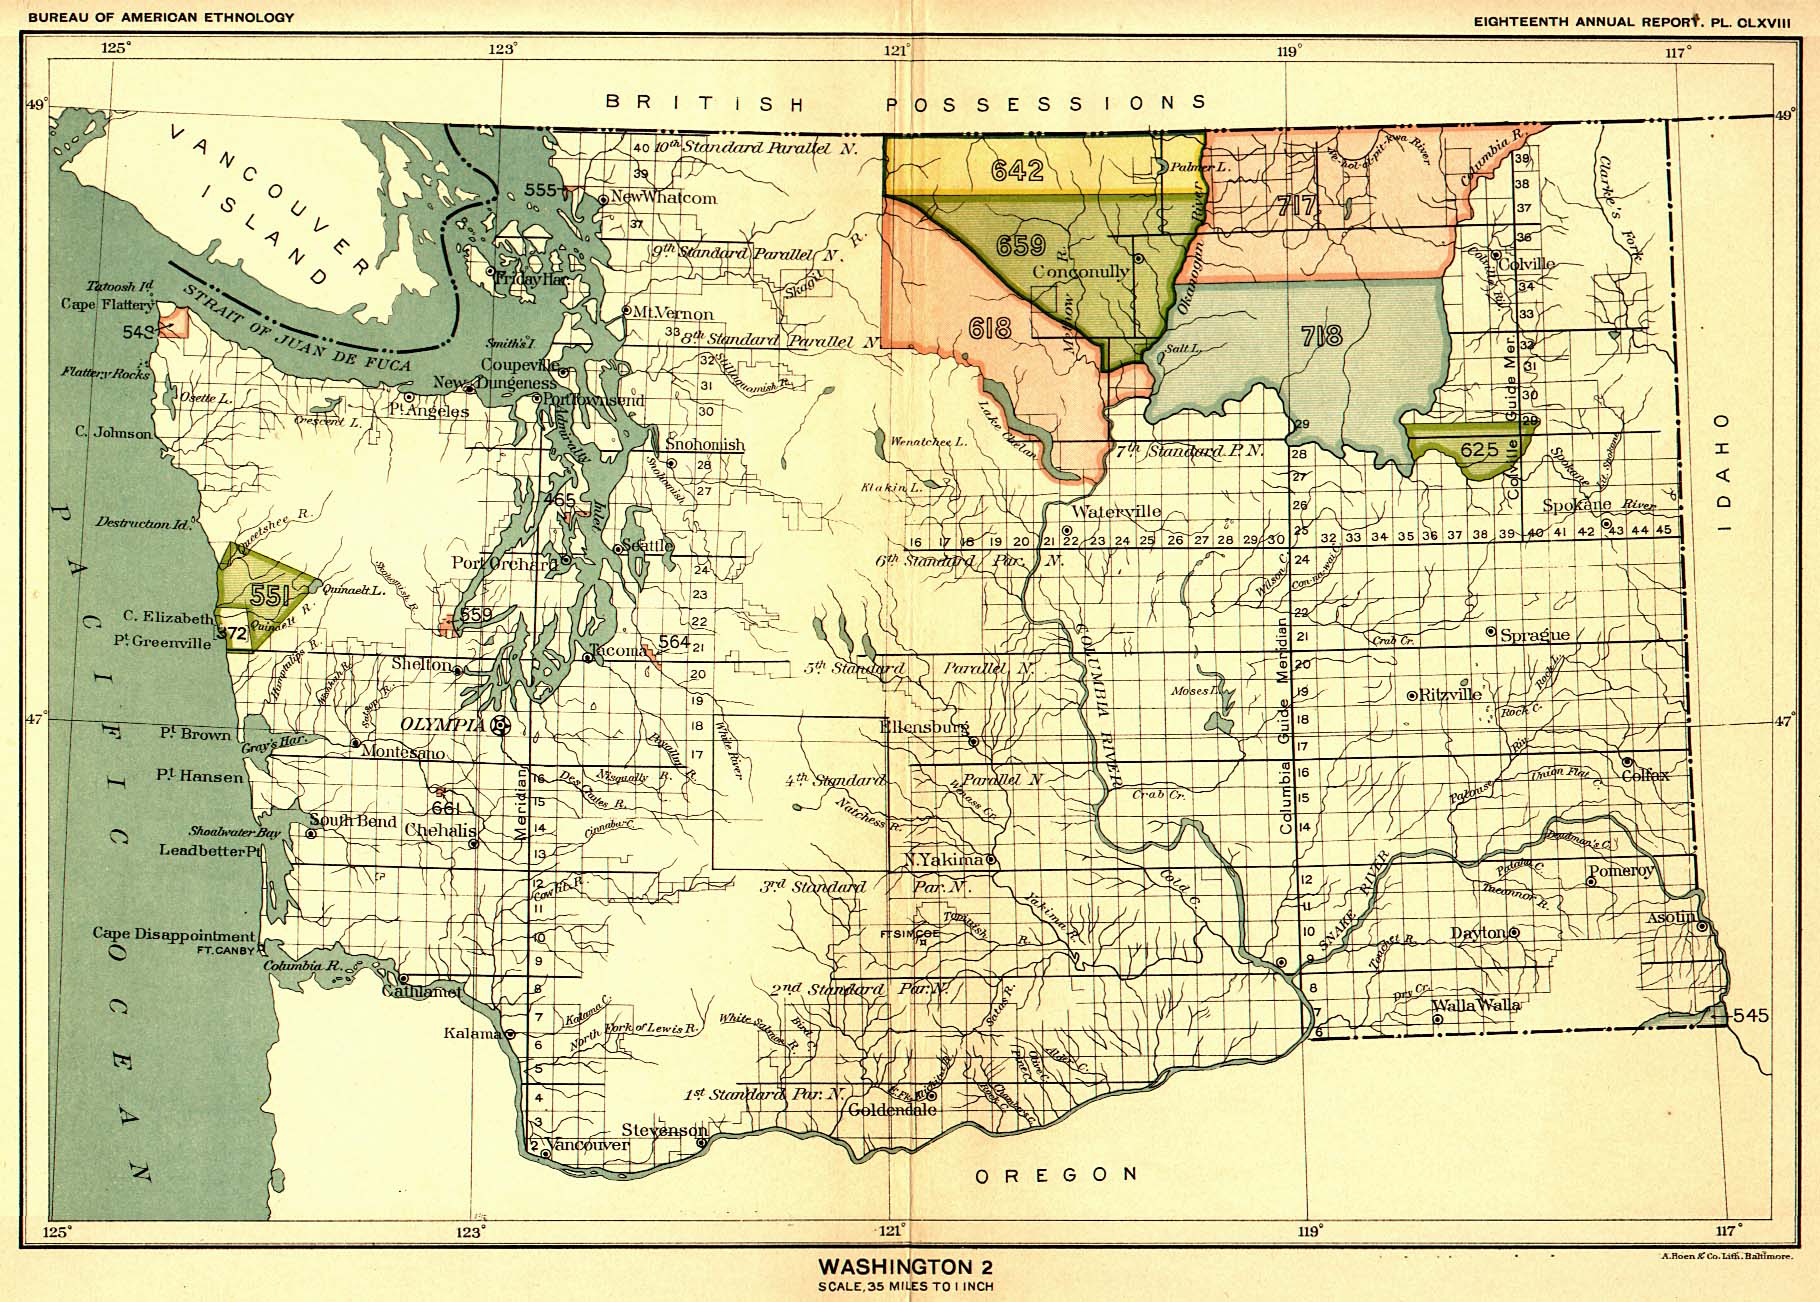 Washington 2, Map 61